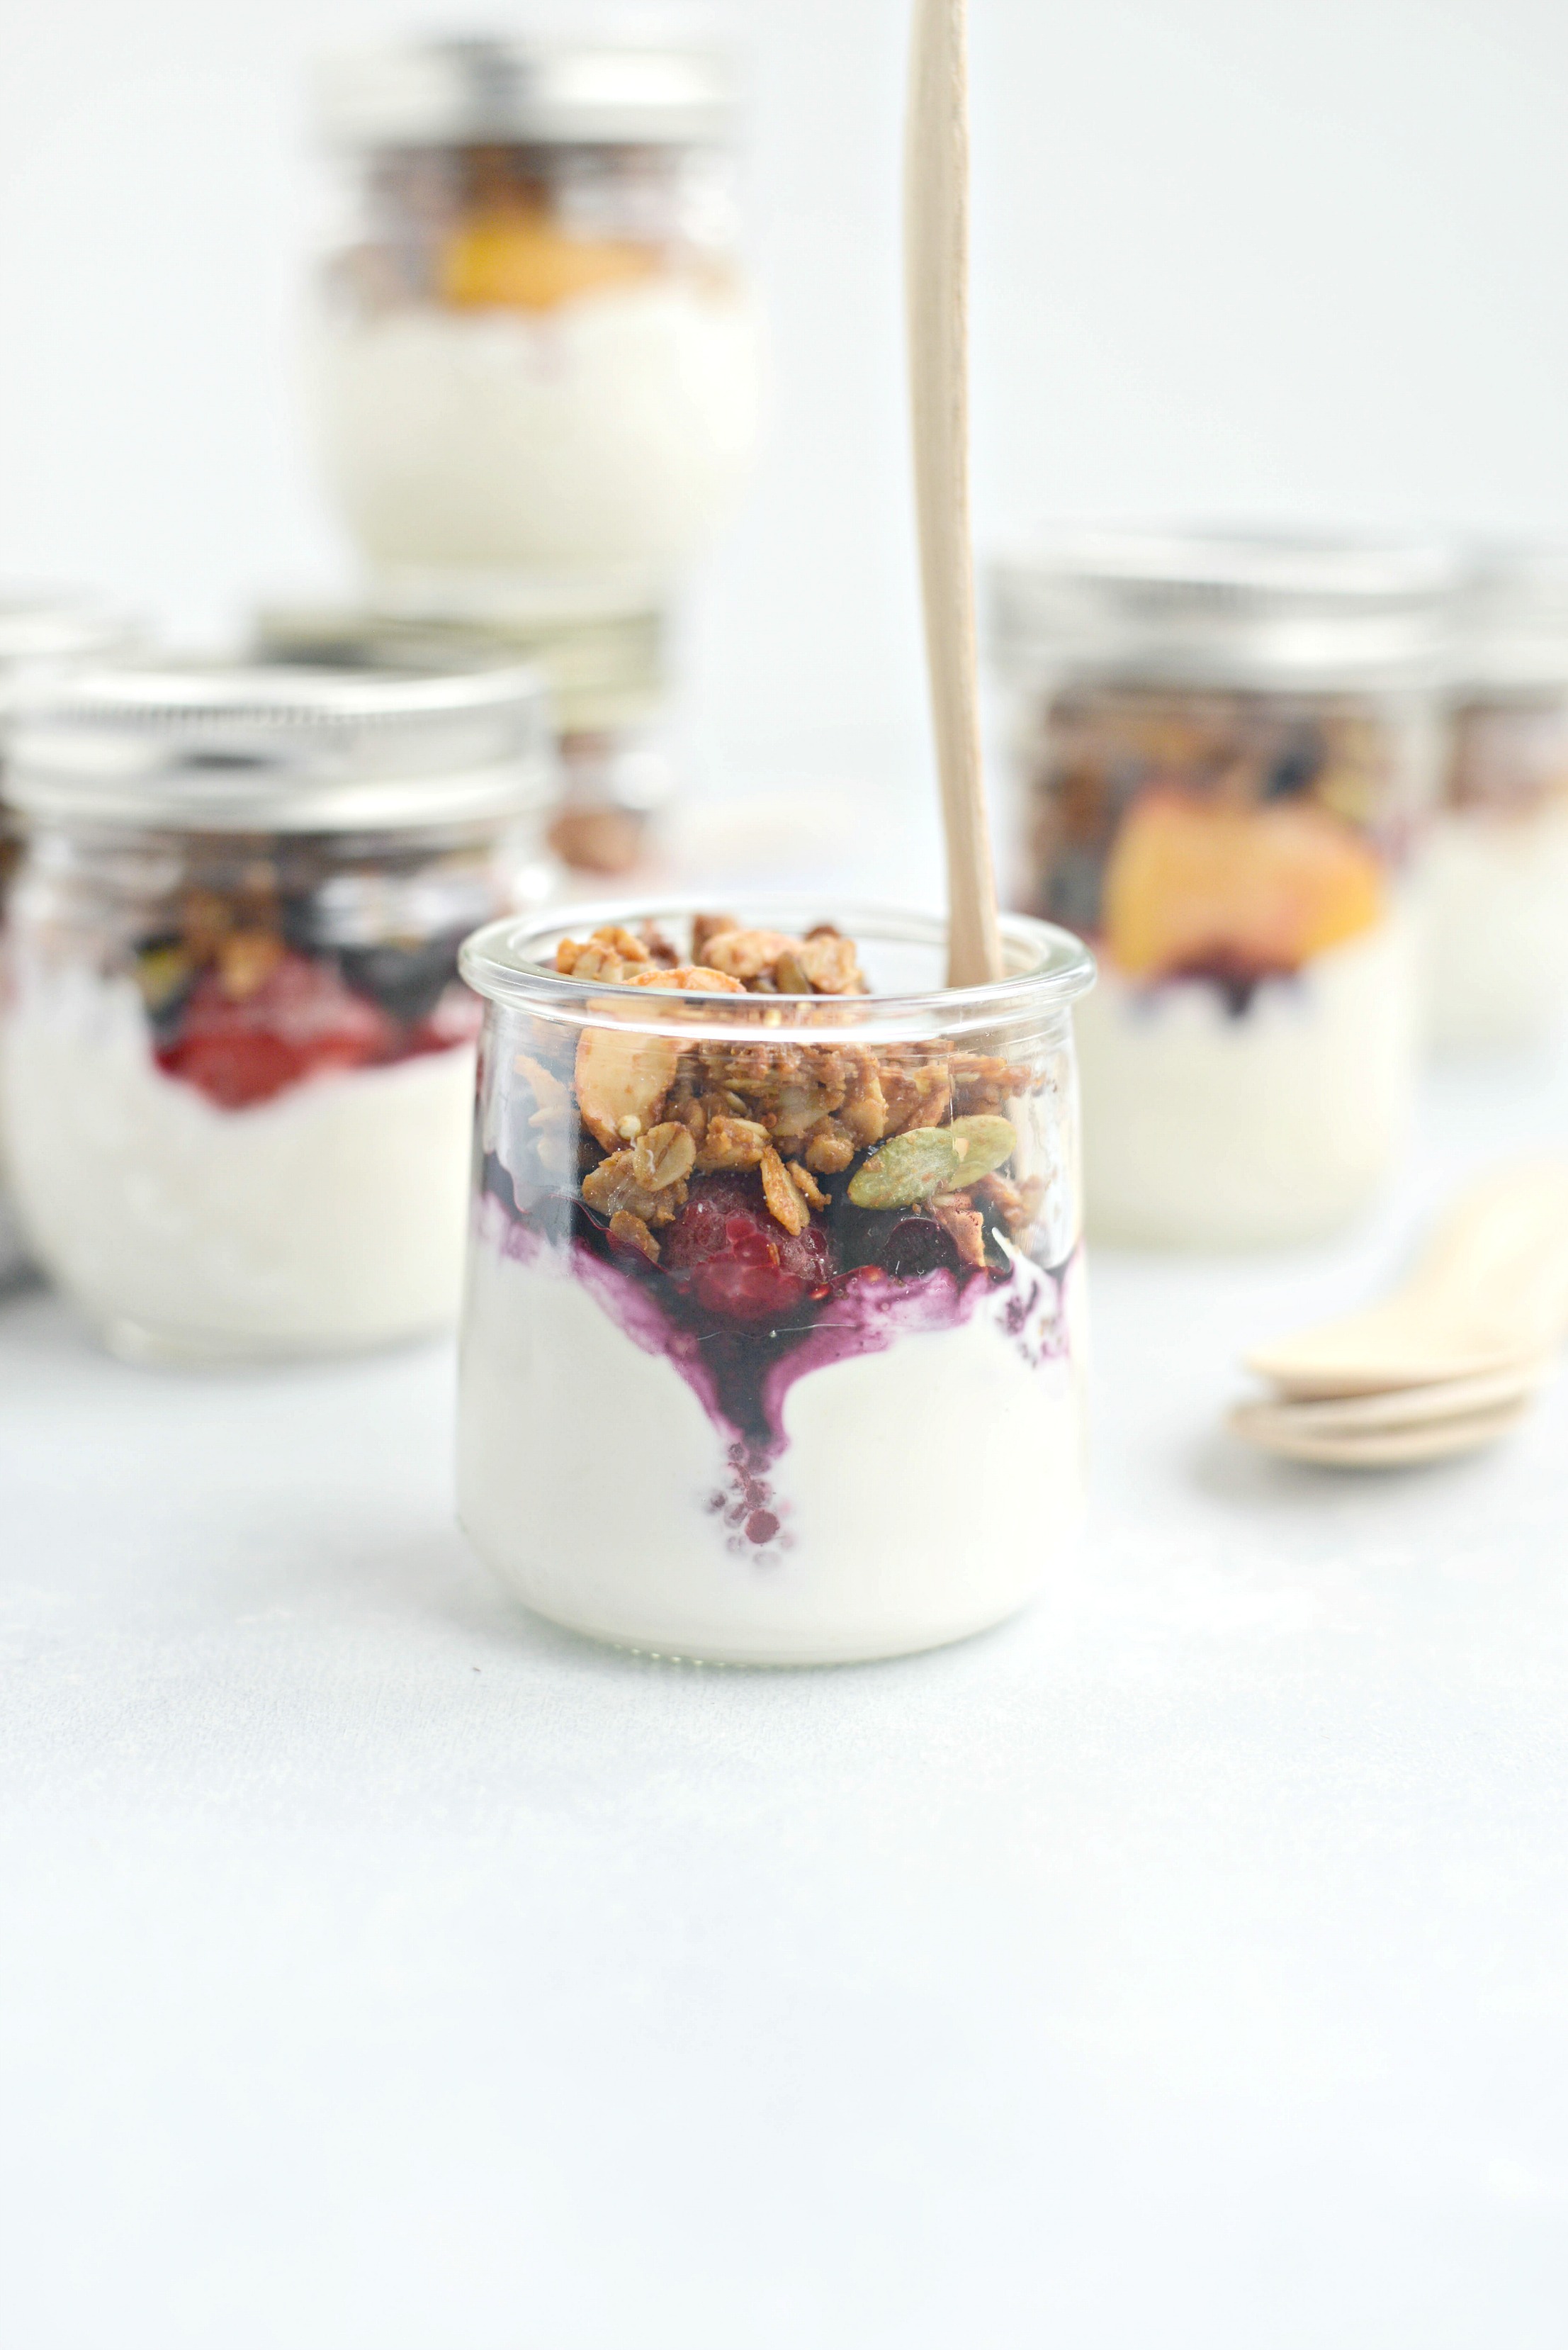 Make-Ahead Fruit and Yogurt Cups - Live Simply